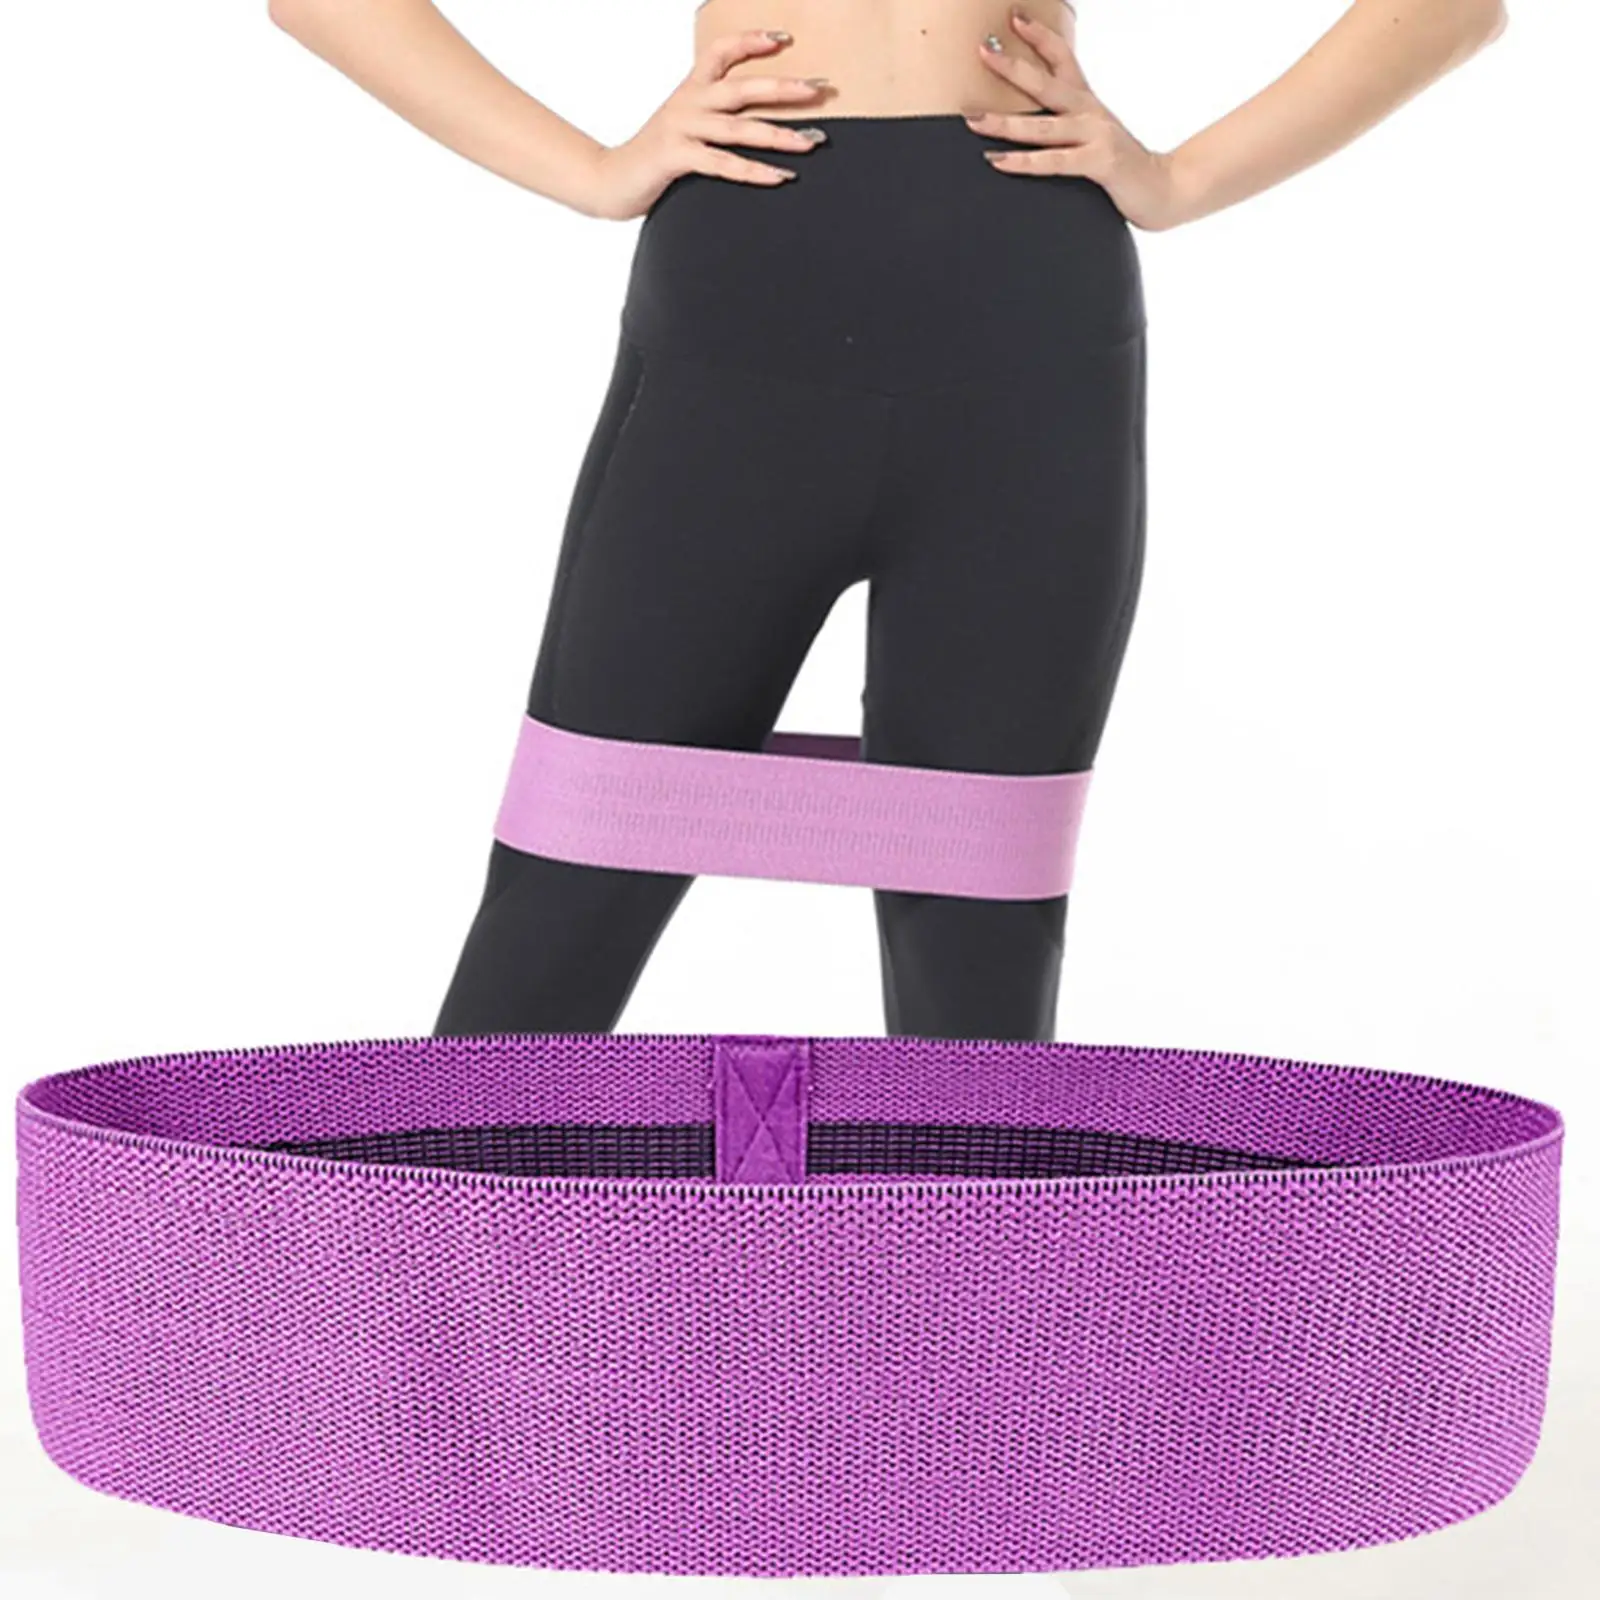 3x Resistance Bands 3 Resistance Levels Stretching Workout Exercise Loops Elastic Belt Bands for Women Men